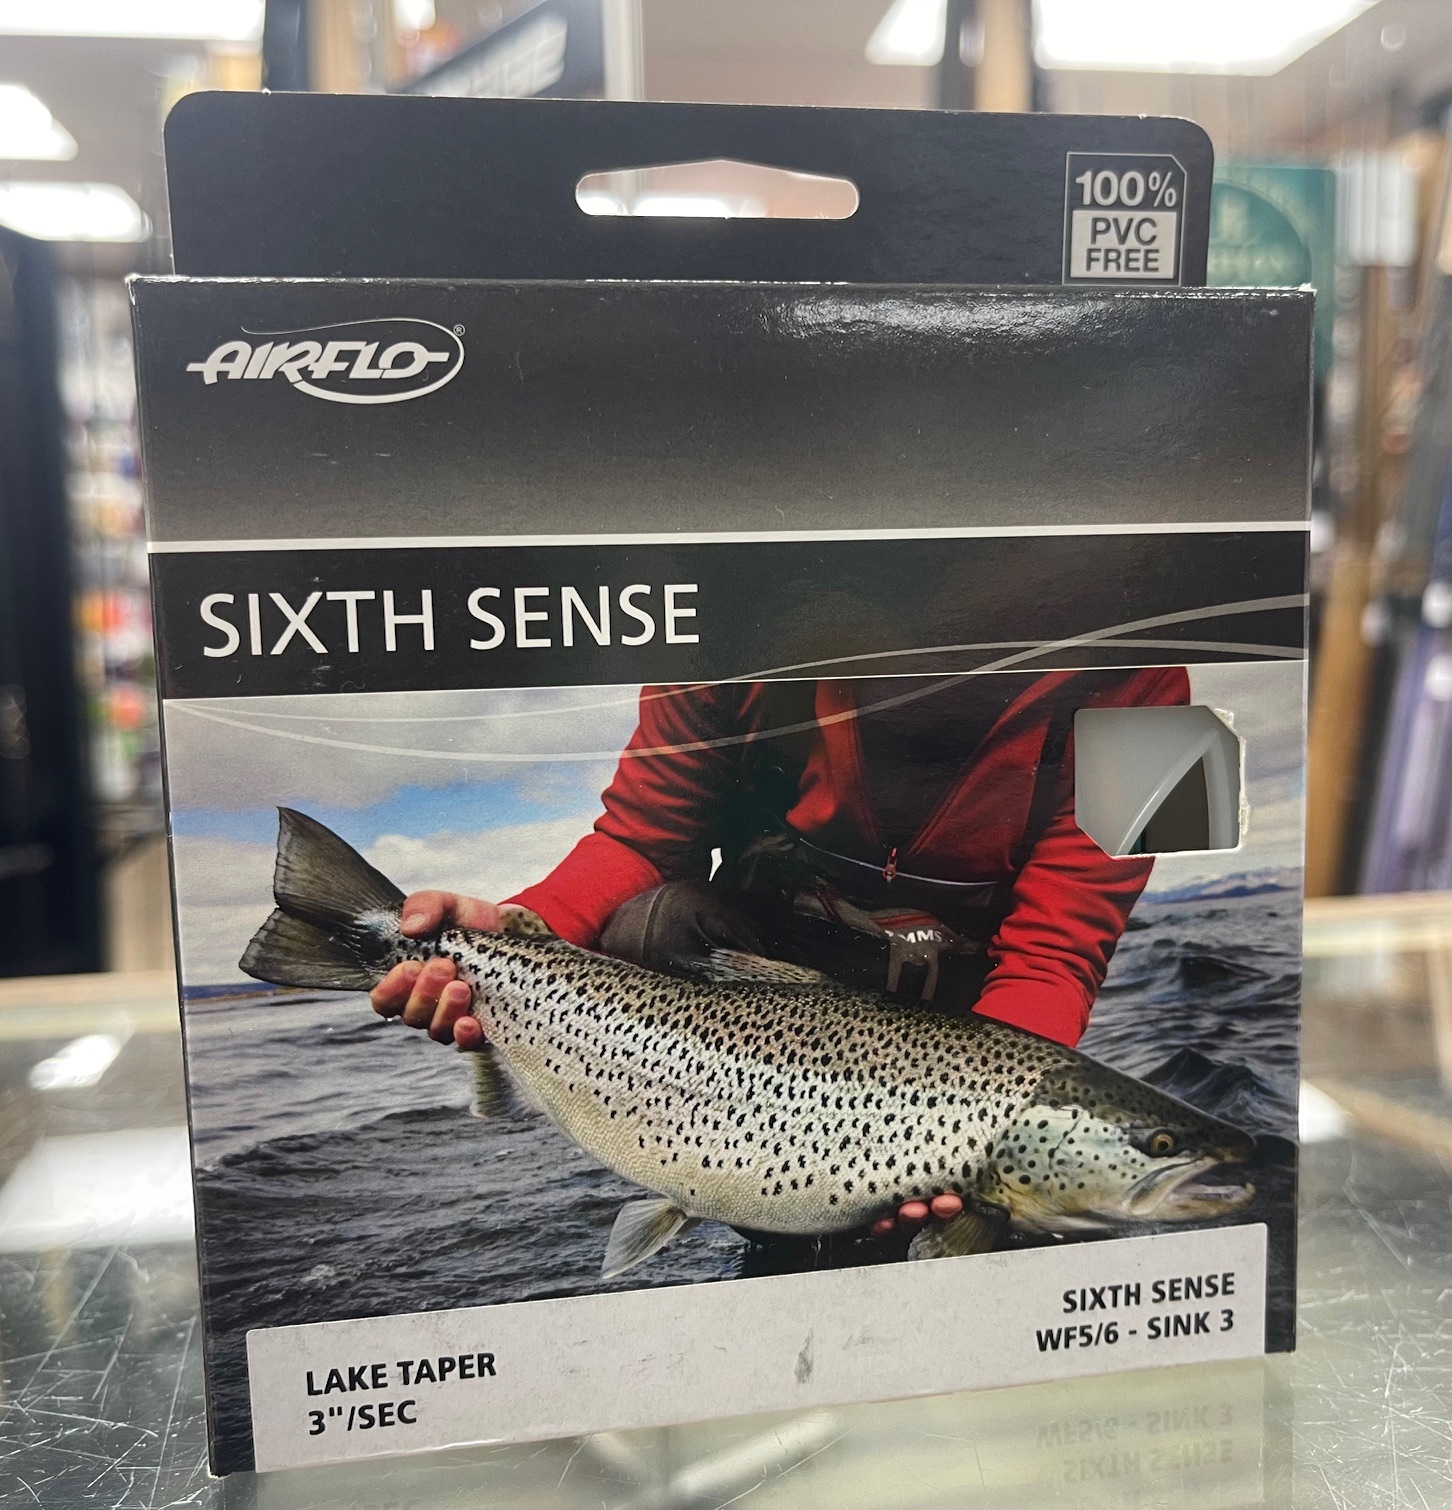 Airflo Sixth Sense Sink 3 - WF5/6 (Older box)